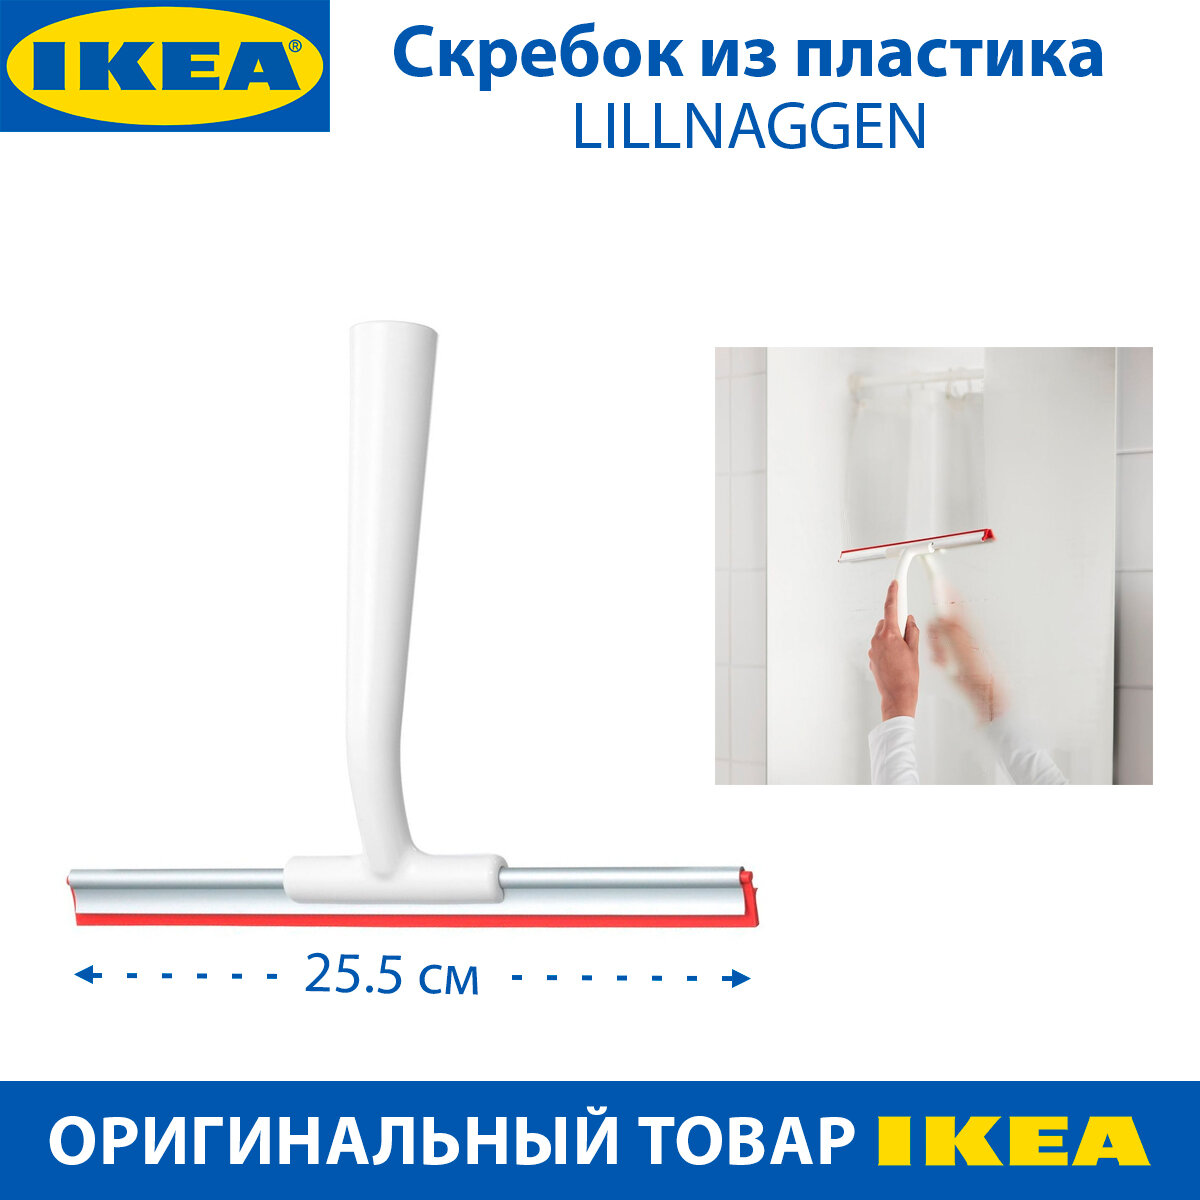 Скребок IKEA - LILLNAGGEN (лилльнаген), пластик, цвет белый, 20х25.5 см, 1 шт